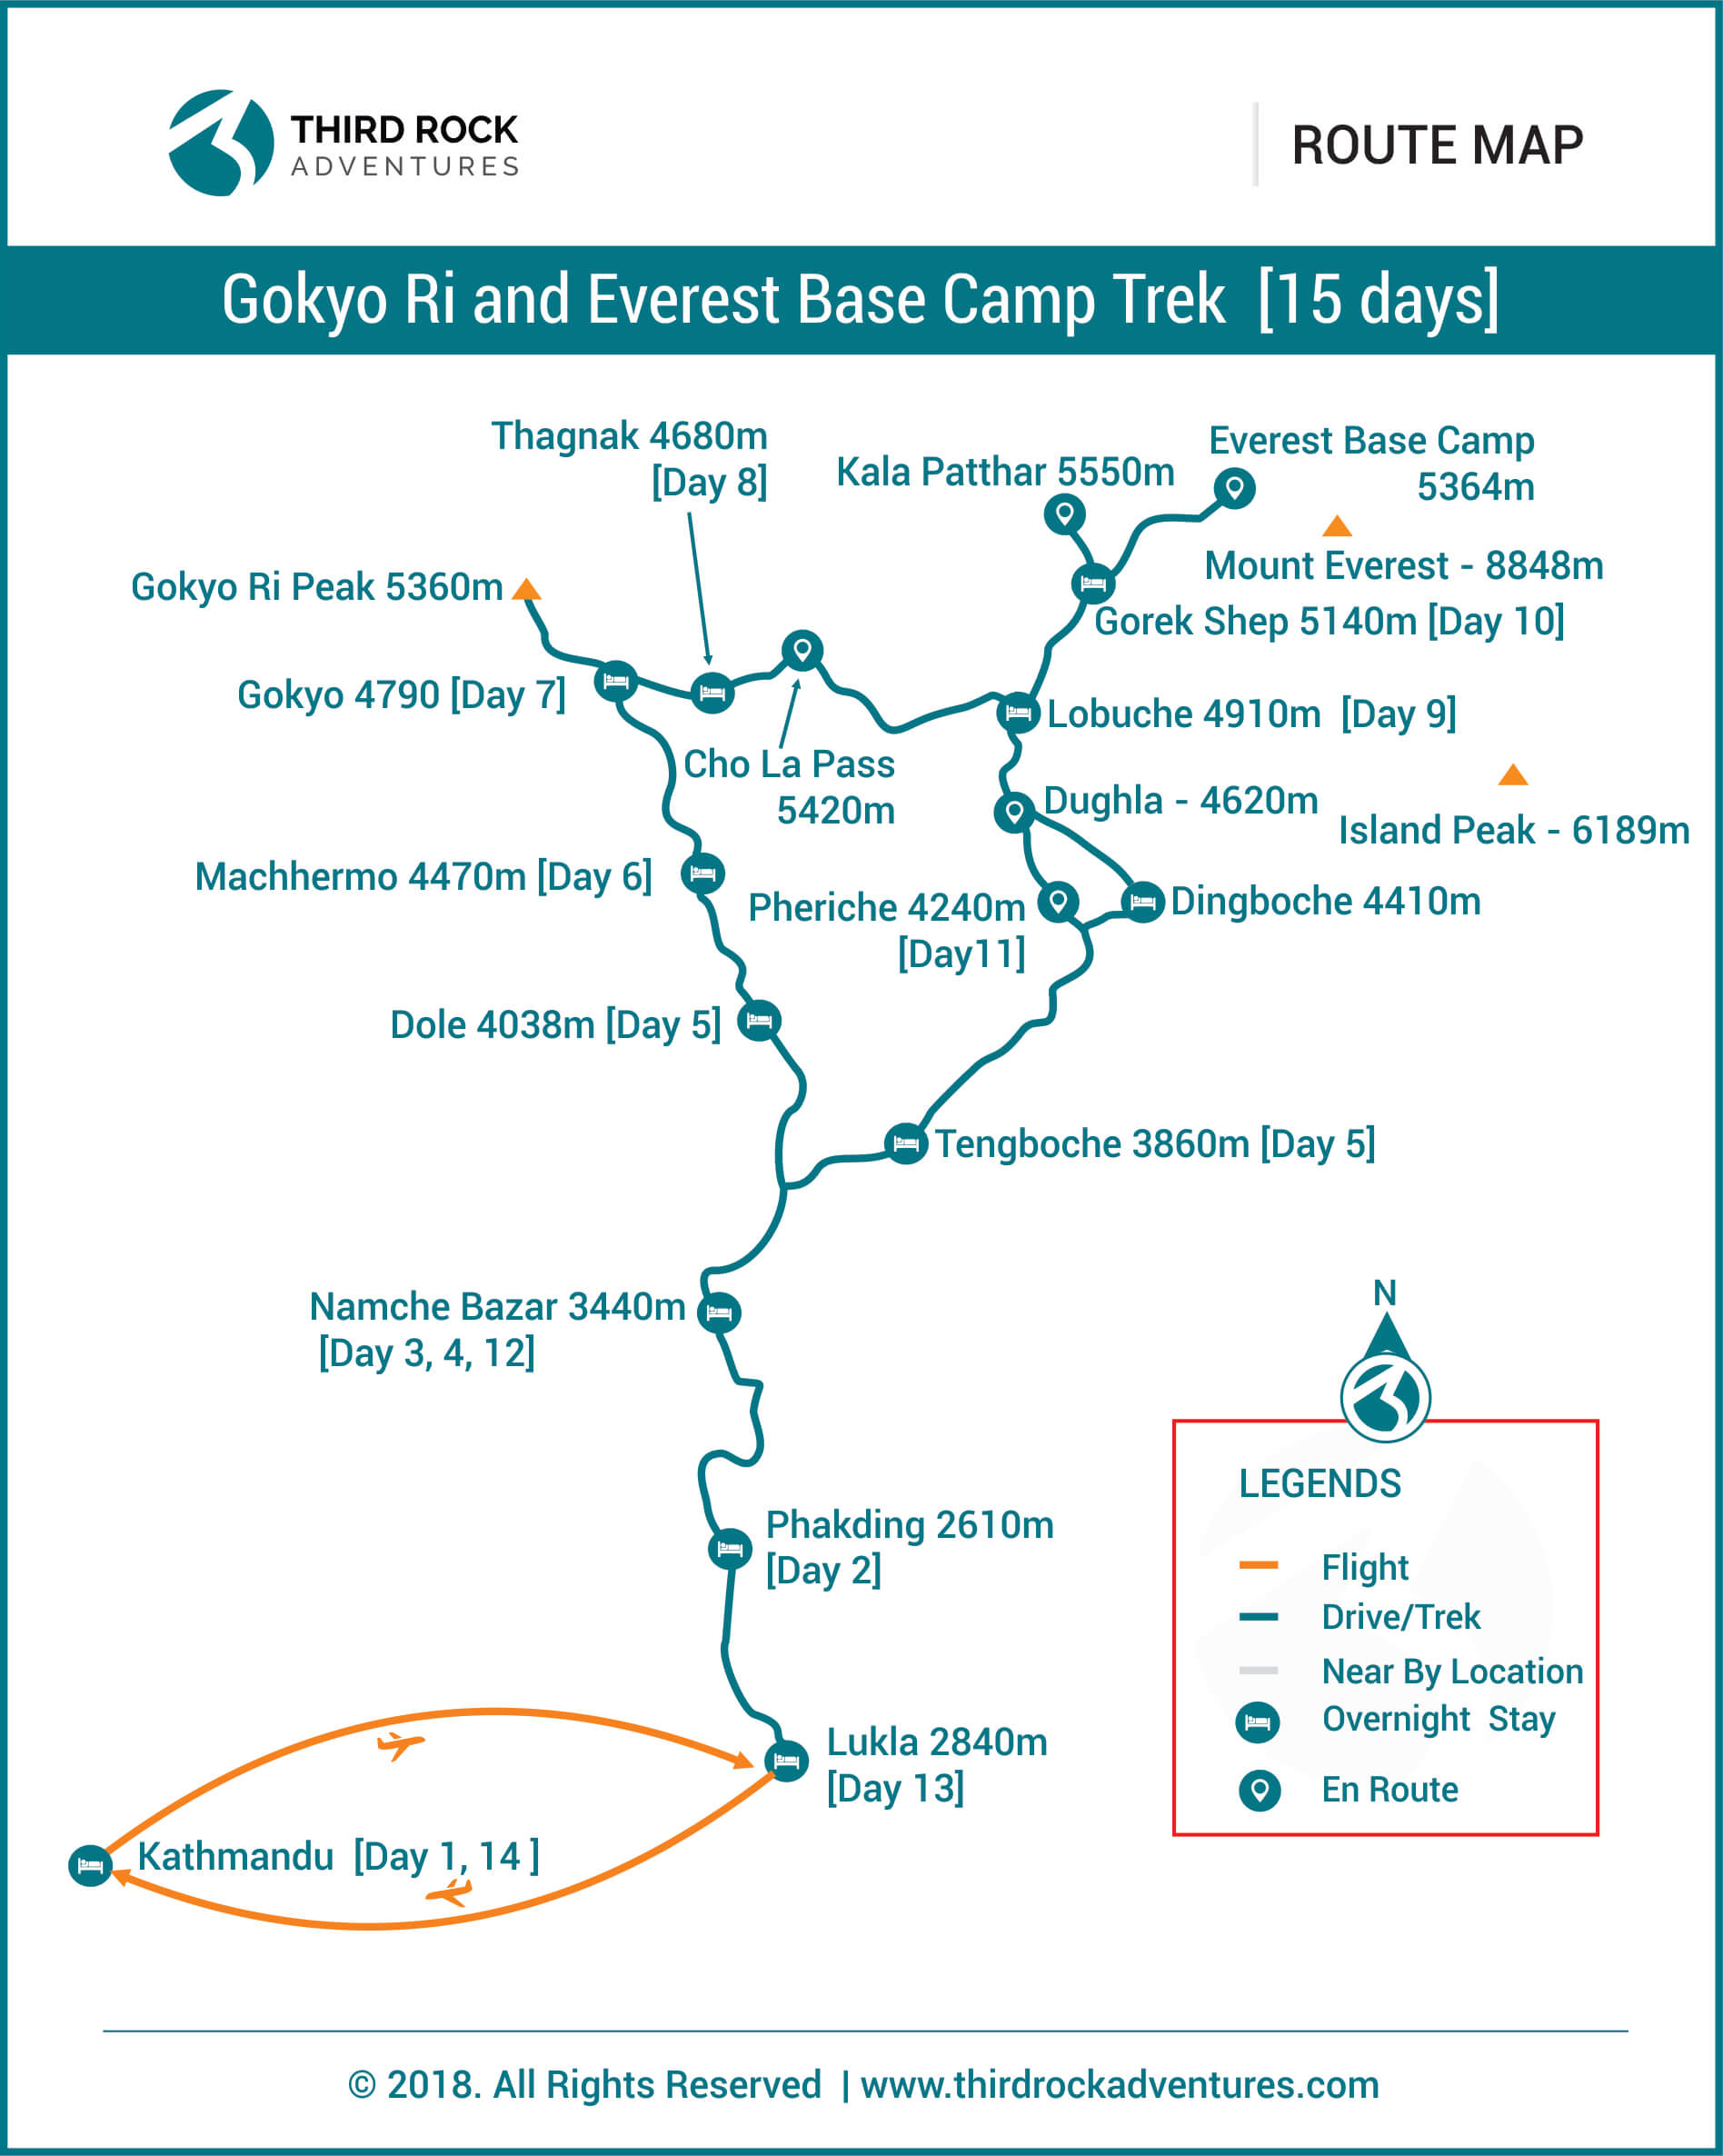 Gokyo Ri and Everest Base Camp Trek 15 days Route Map